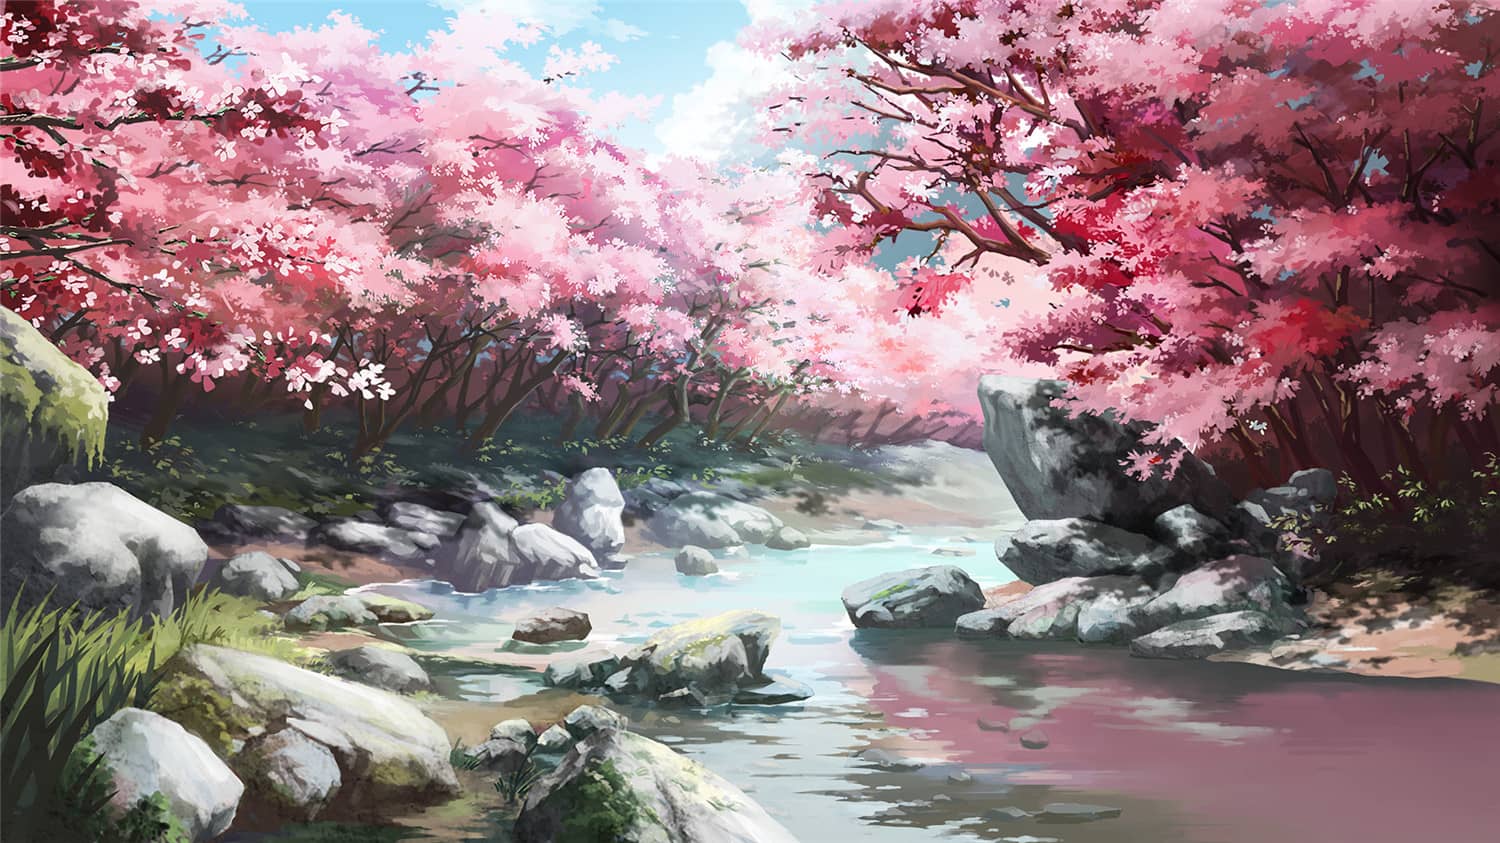 葬花·暗黑桃花源/Lay a Beauty to Rest: The Darkness Peach Blossom Spring插图9